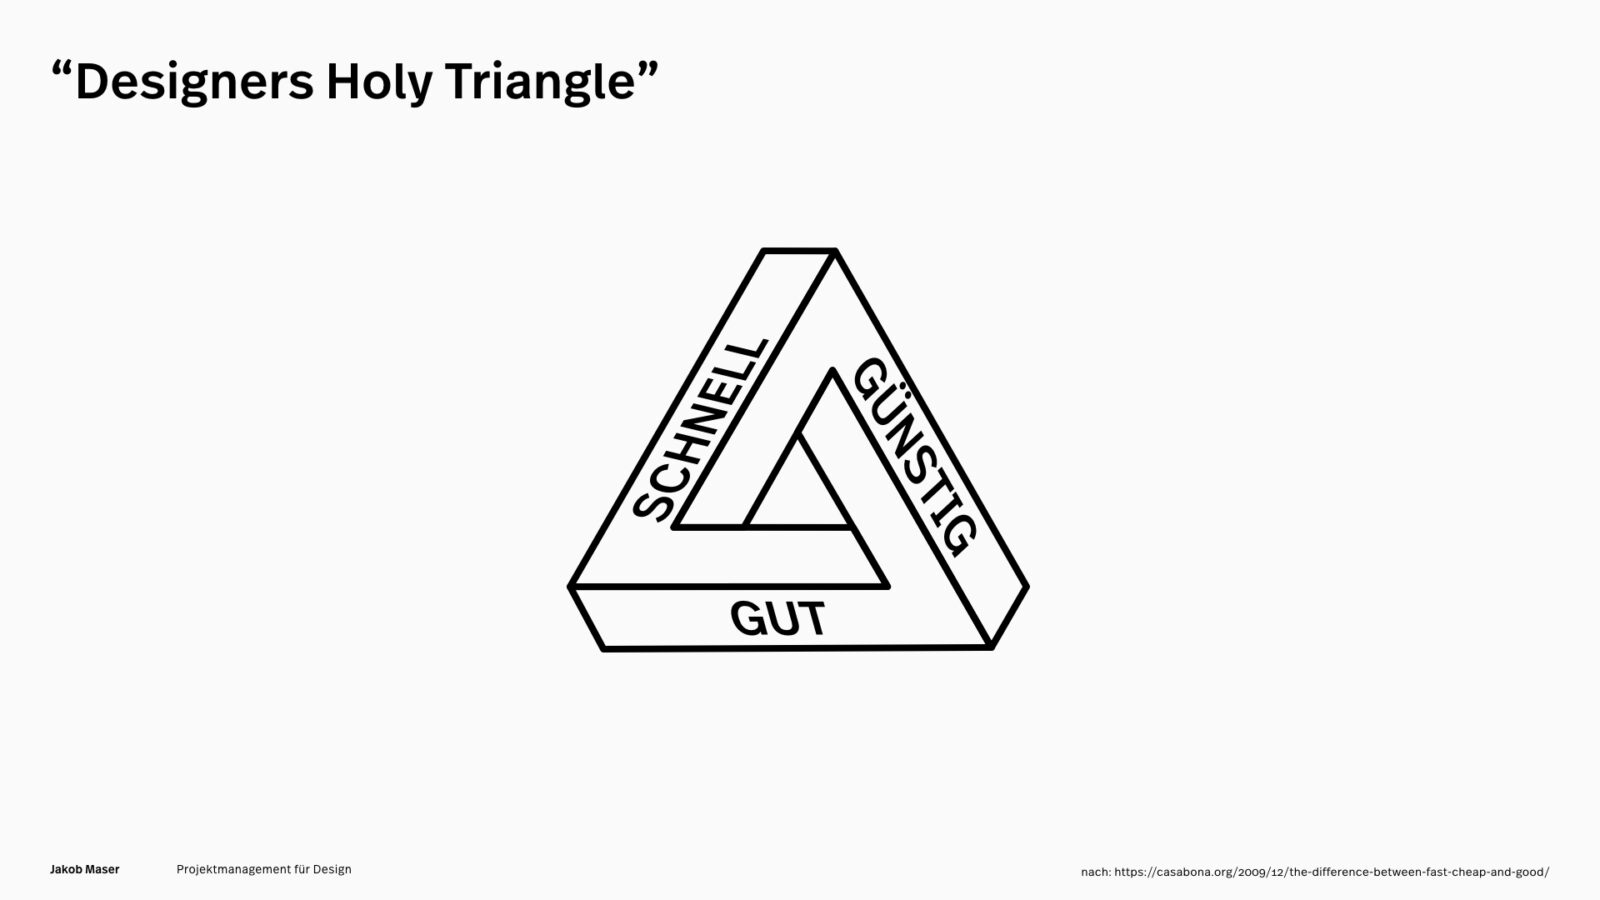 Designers’ Holy Triangle